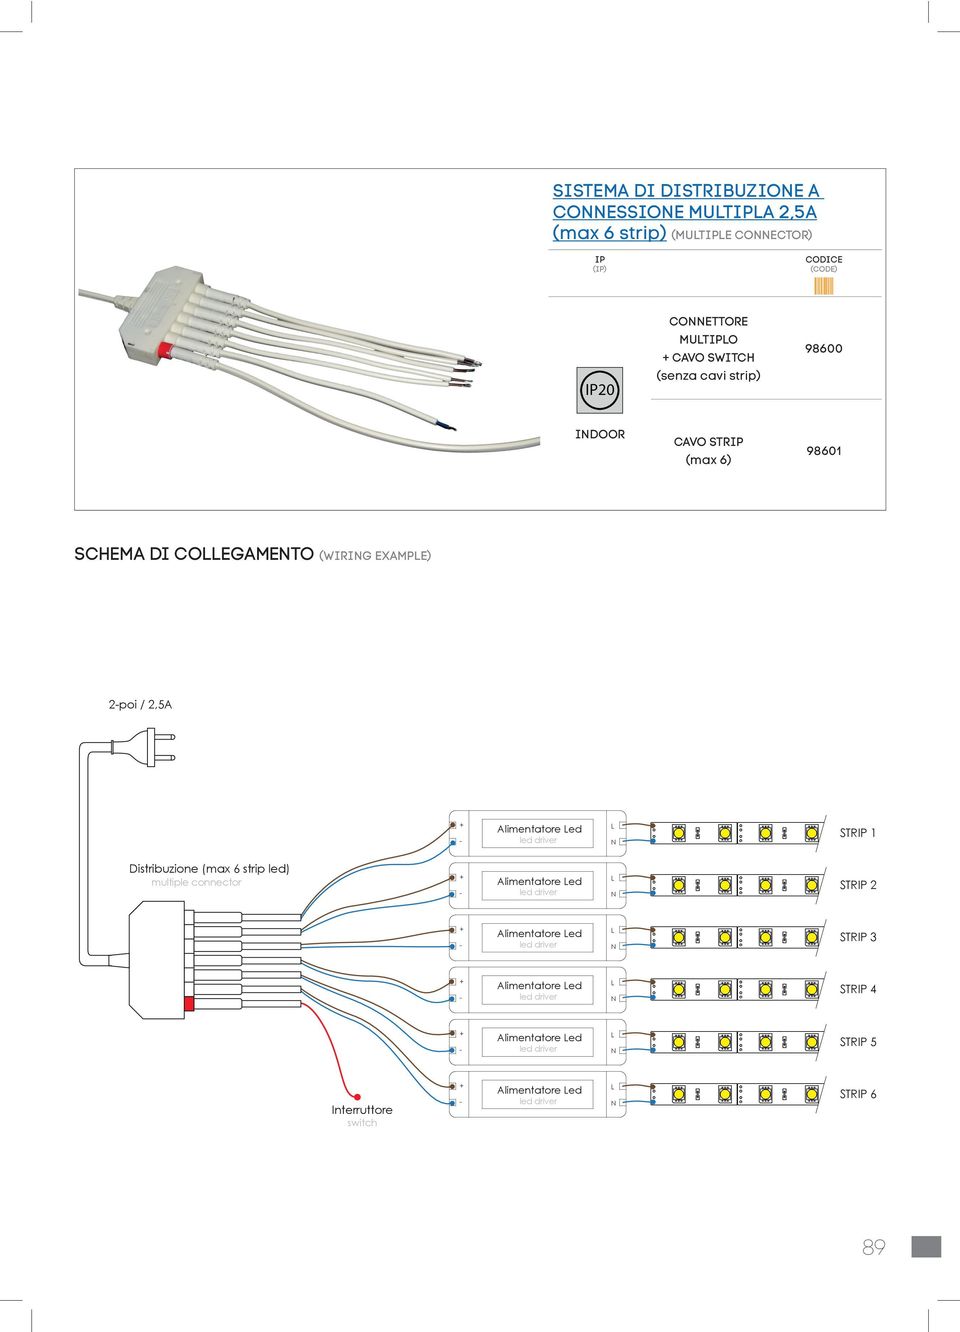 Distribuzione (max 6 strip led) multiple connector + - Alimentatore Led led driver L N STR 2 + - Alimentatore Led led driver L N STR 3 +